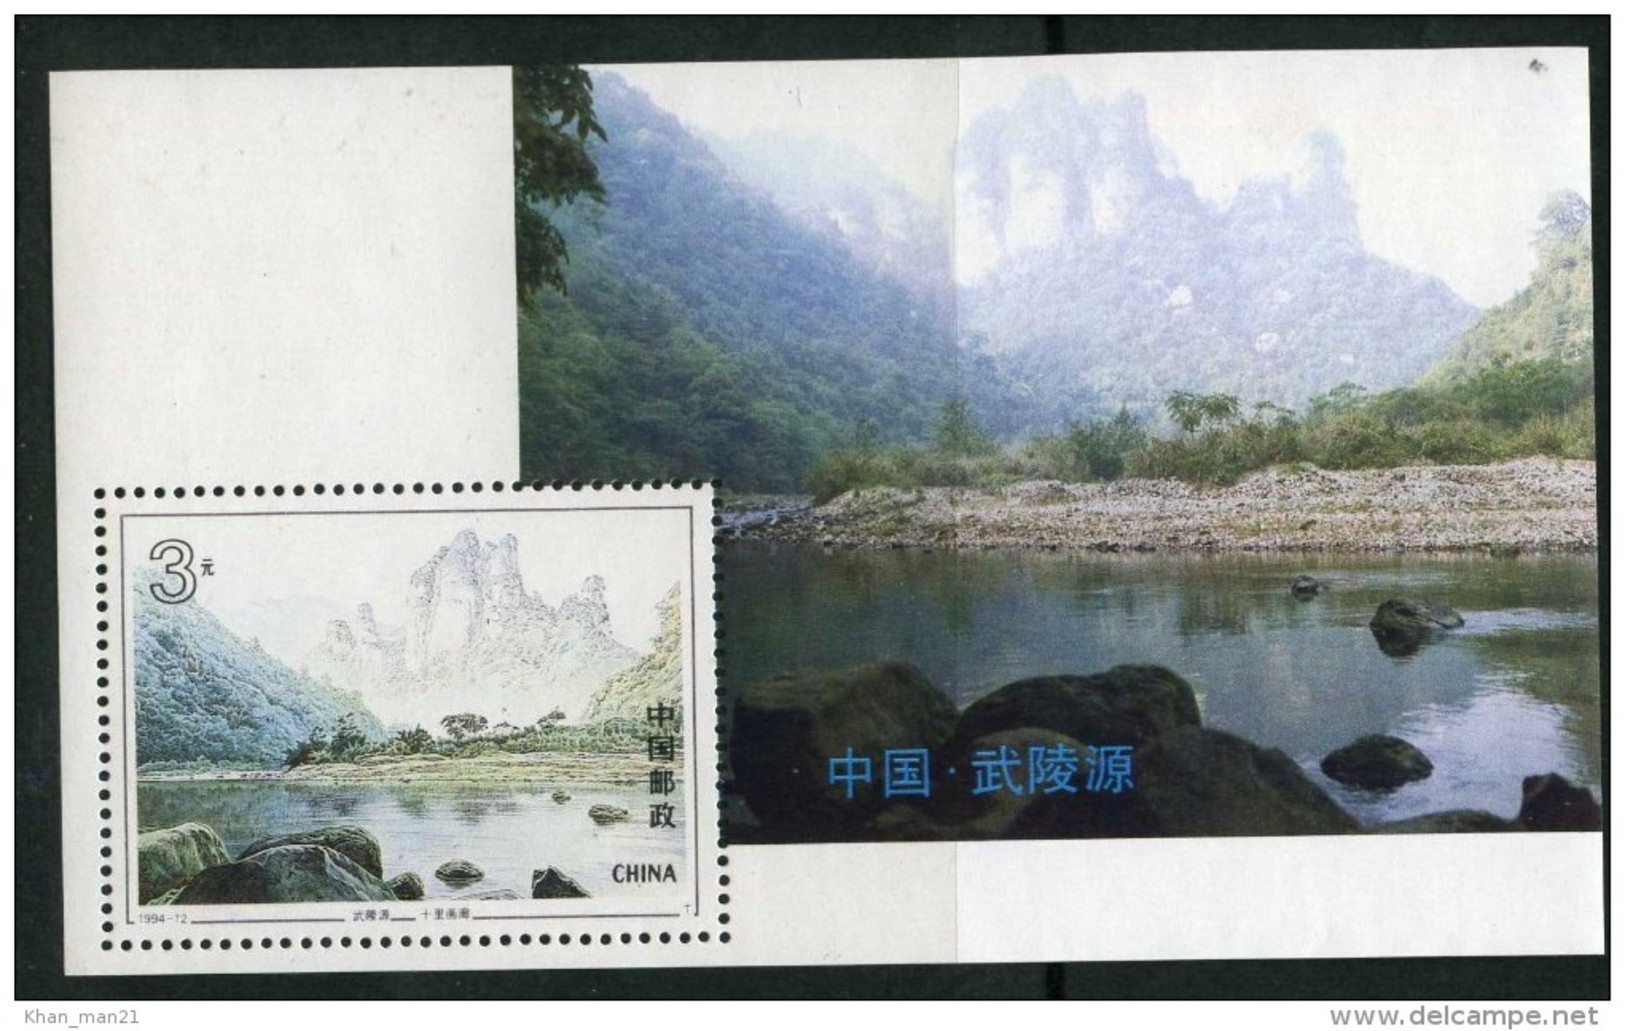 China, 1994, Mi. 2551 (bl. 66), Sc. 2517, Y&T 69, SG 3922, UNESCO World Heritage Site, Wulingyuan, MNH - Blocks & Sheetlets